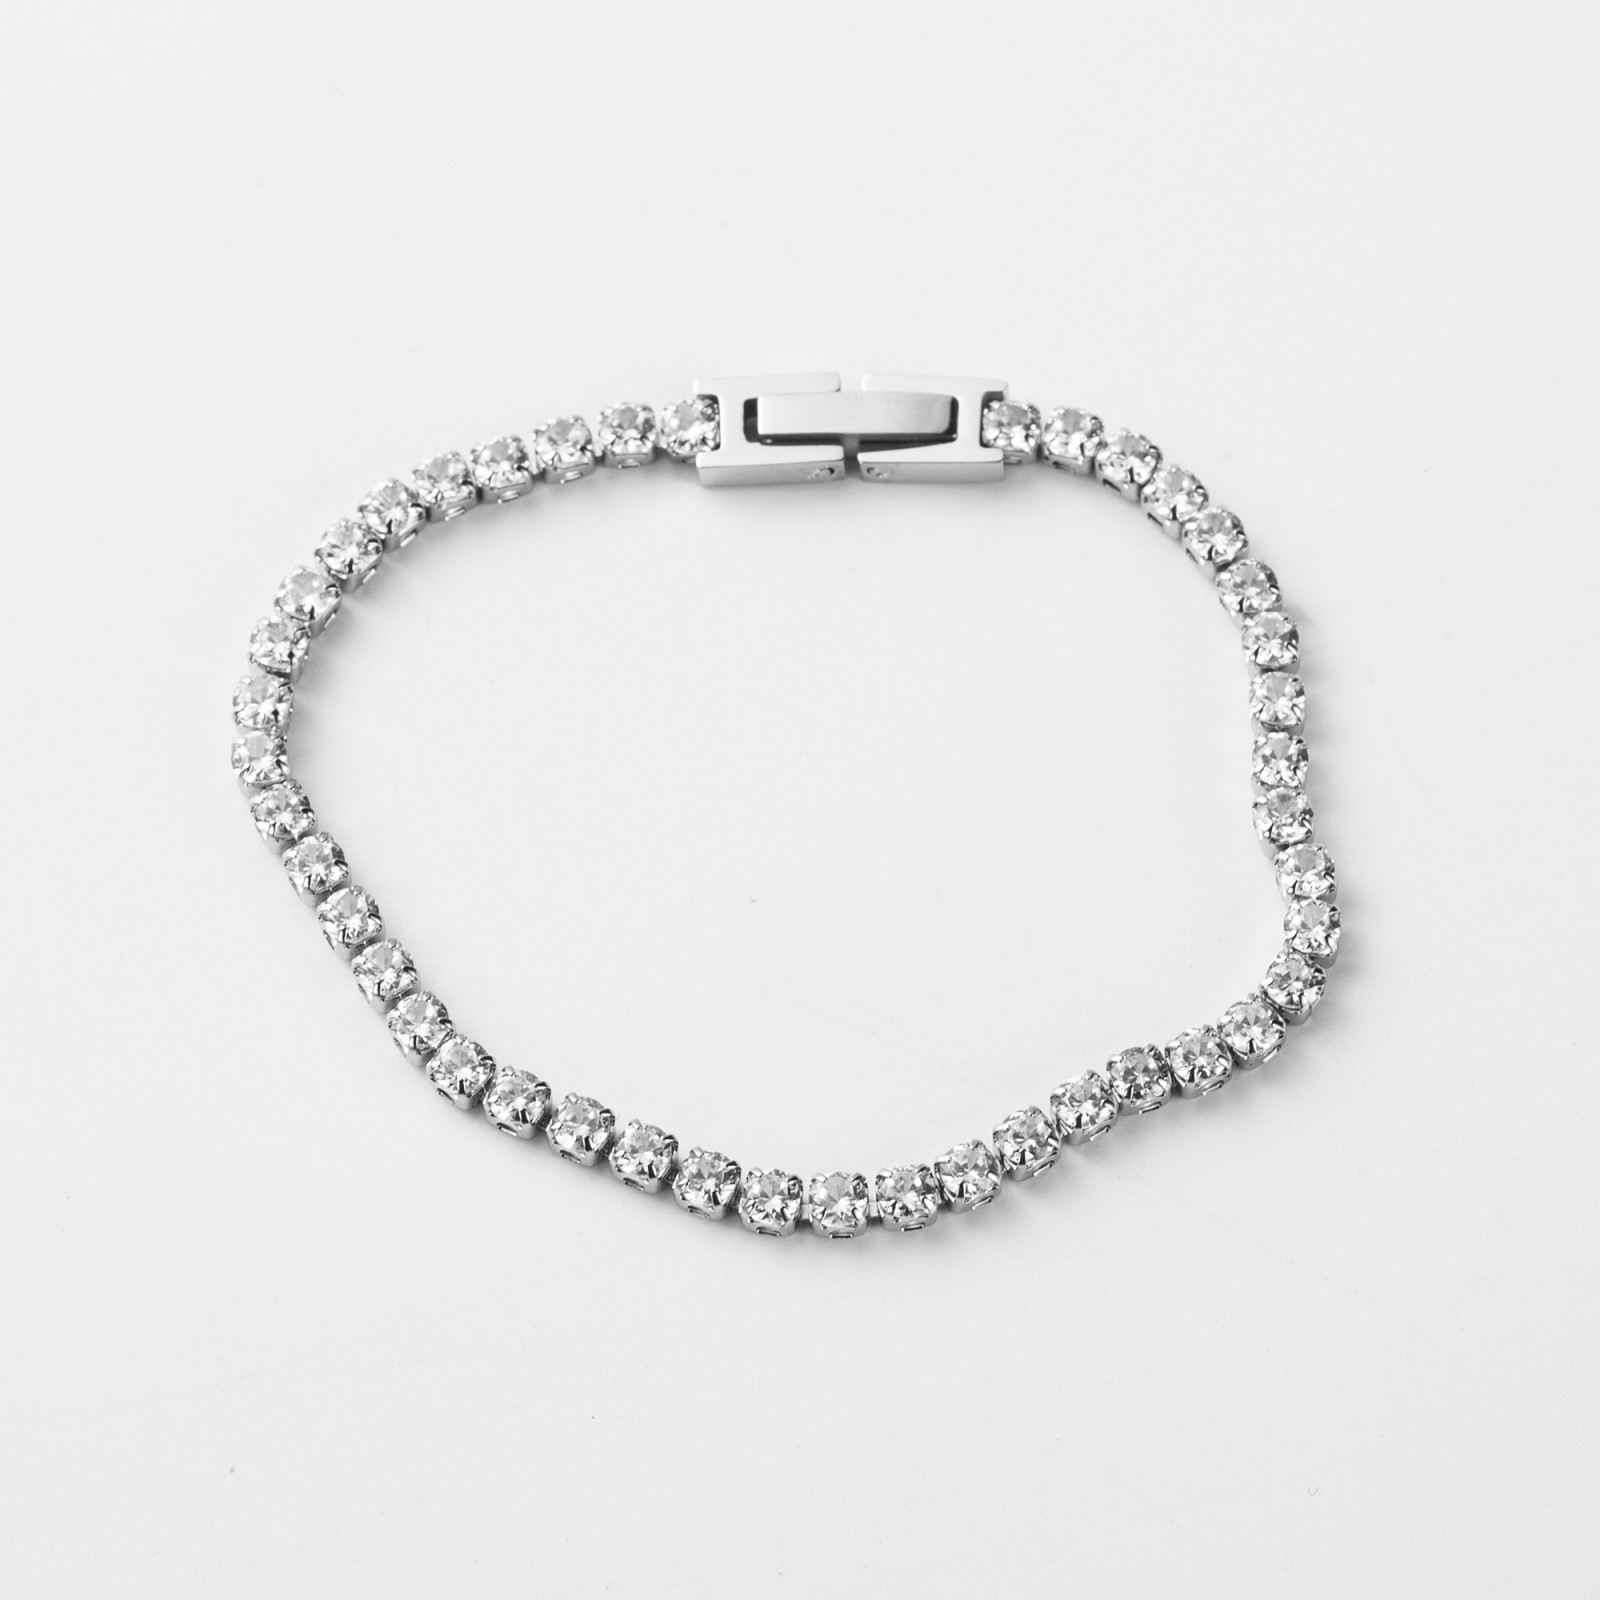 Bracelet chain